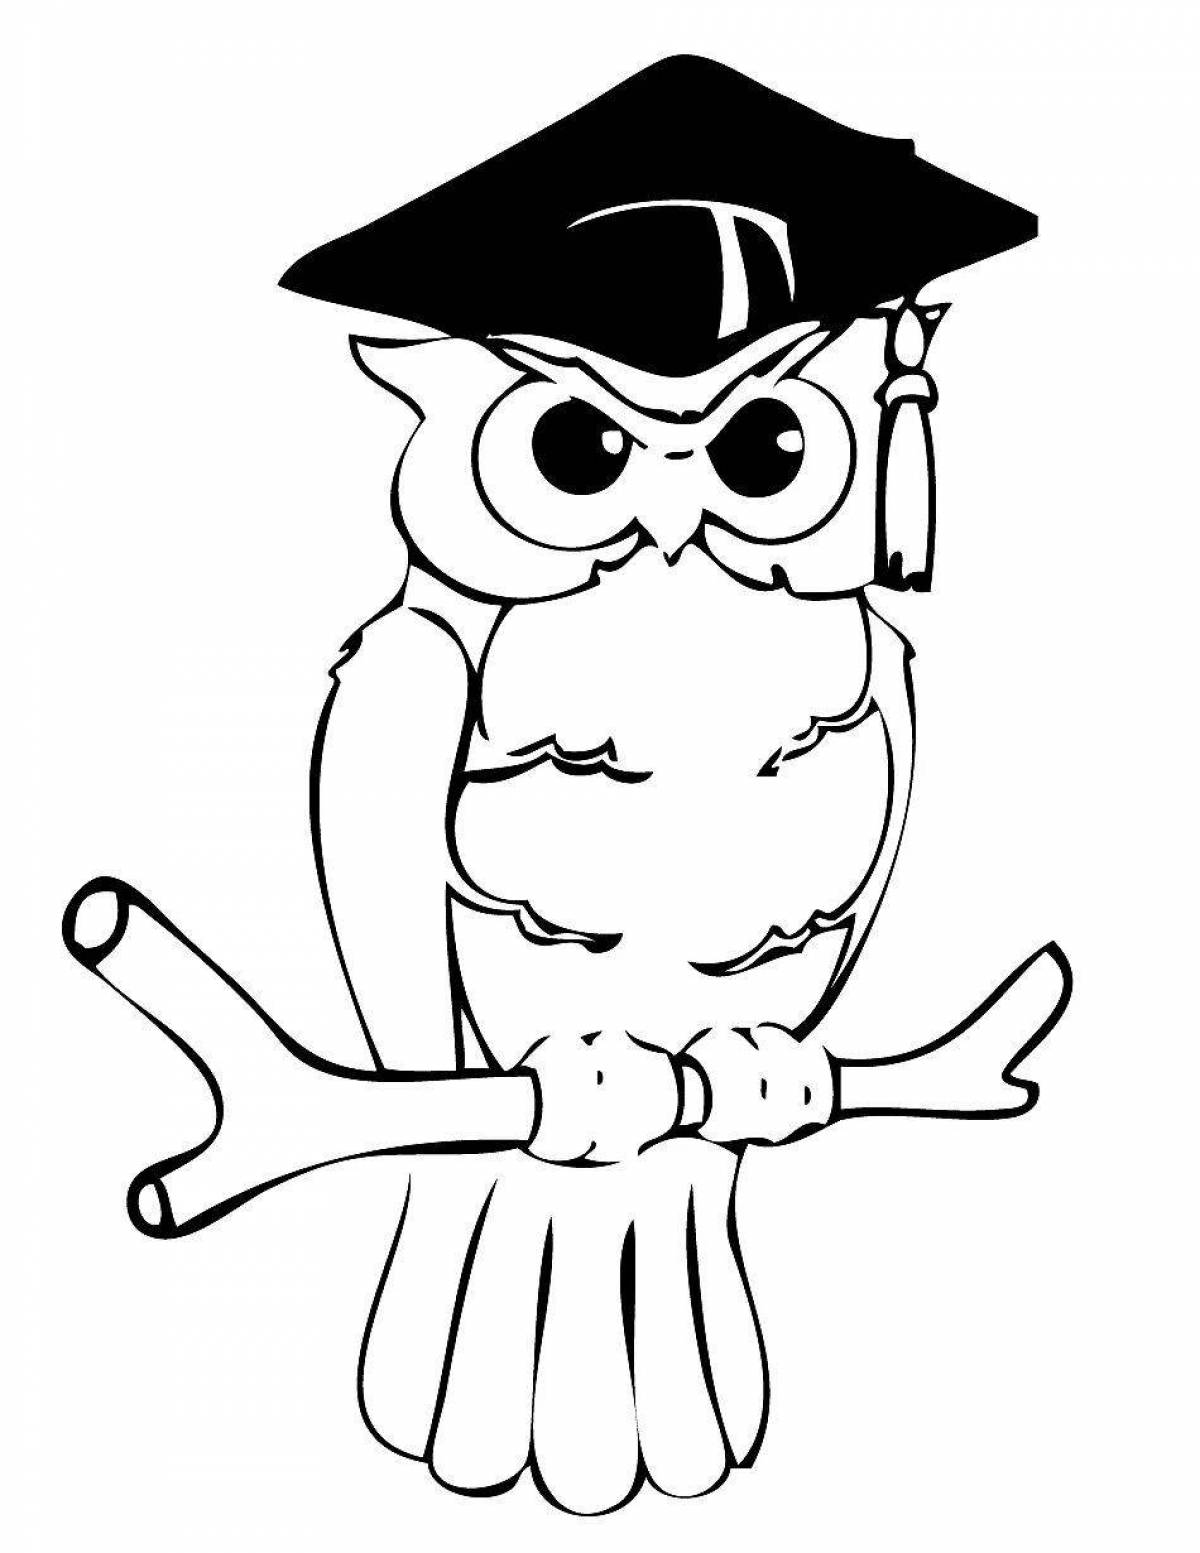 Joyful smart owl coloring pages for kids